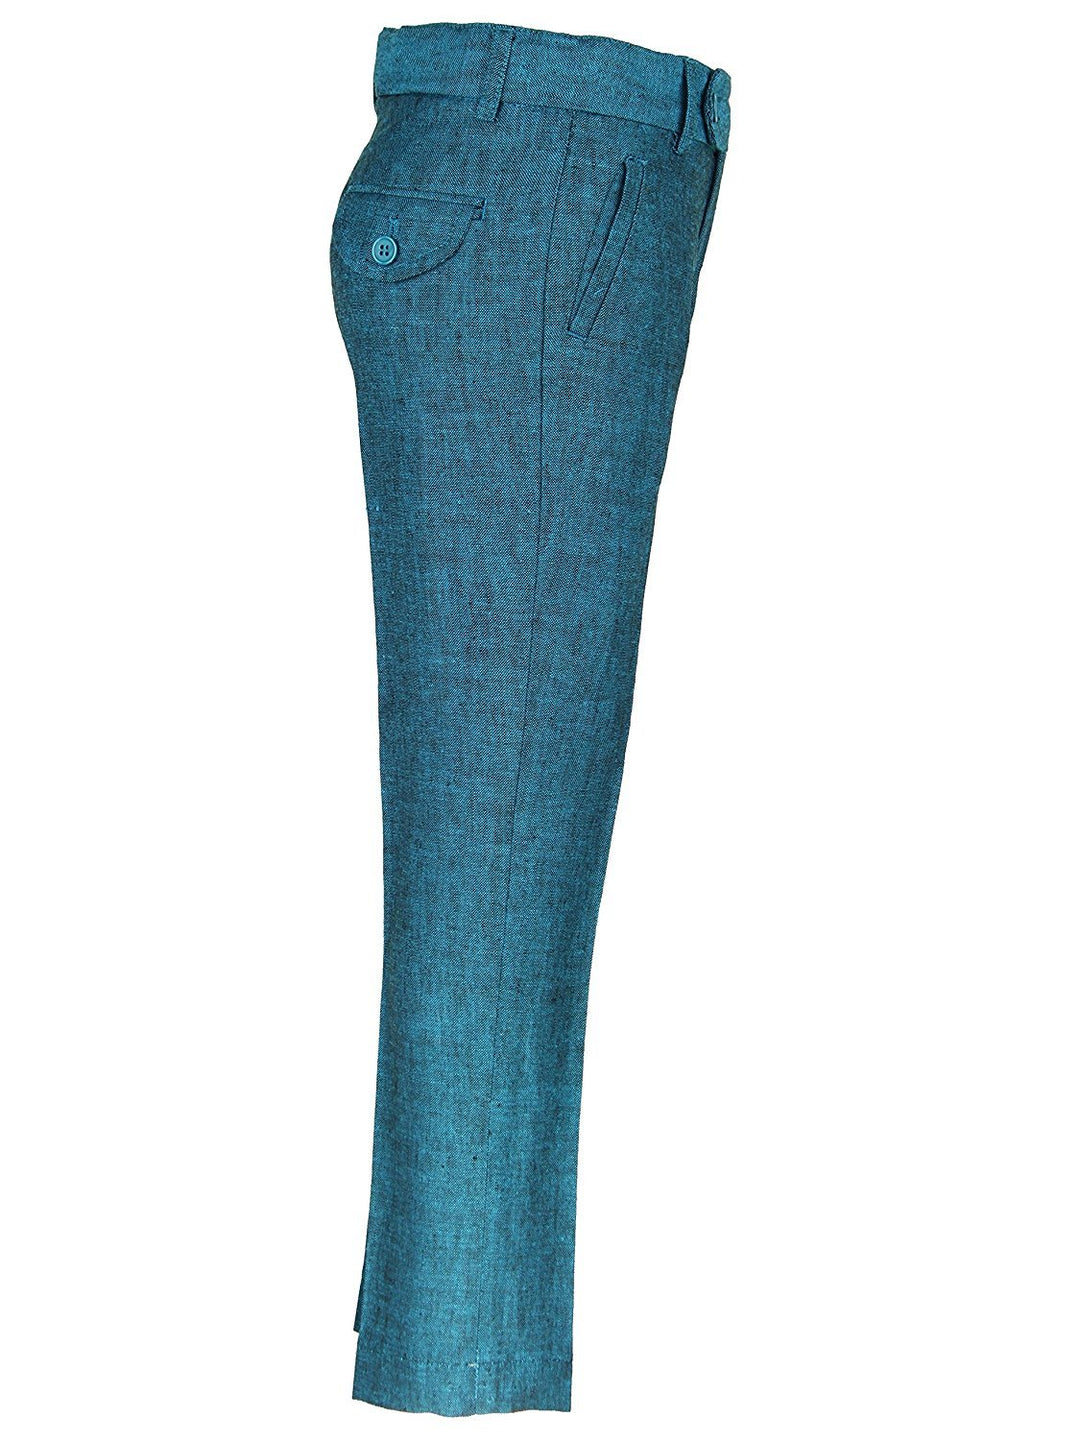 Isaac Mizrahi Boy's 2-20 Slim Fit Flat Front Solid Linen Pants - CLEARANCE - FINAL SALE